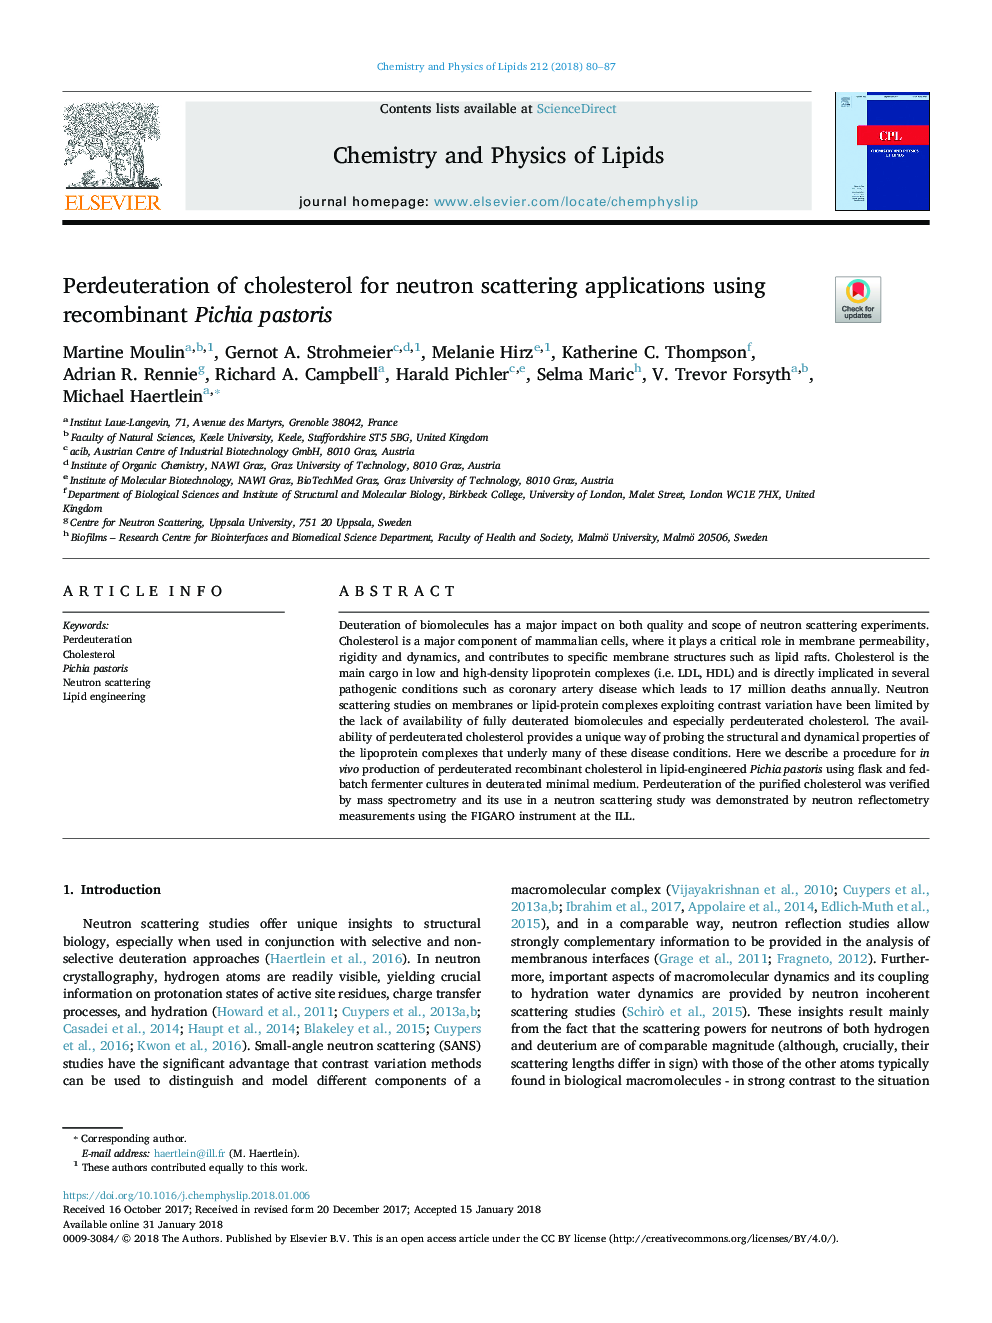 Perdeuteration of cholesterol for neutron scattering applications using recombinant Pichia pastoris